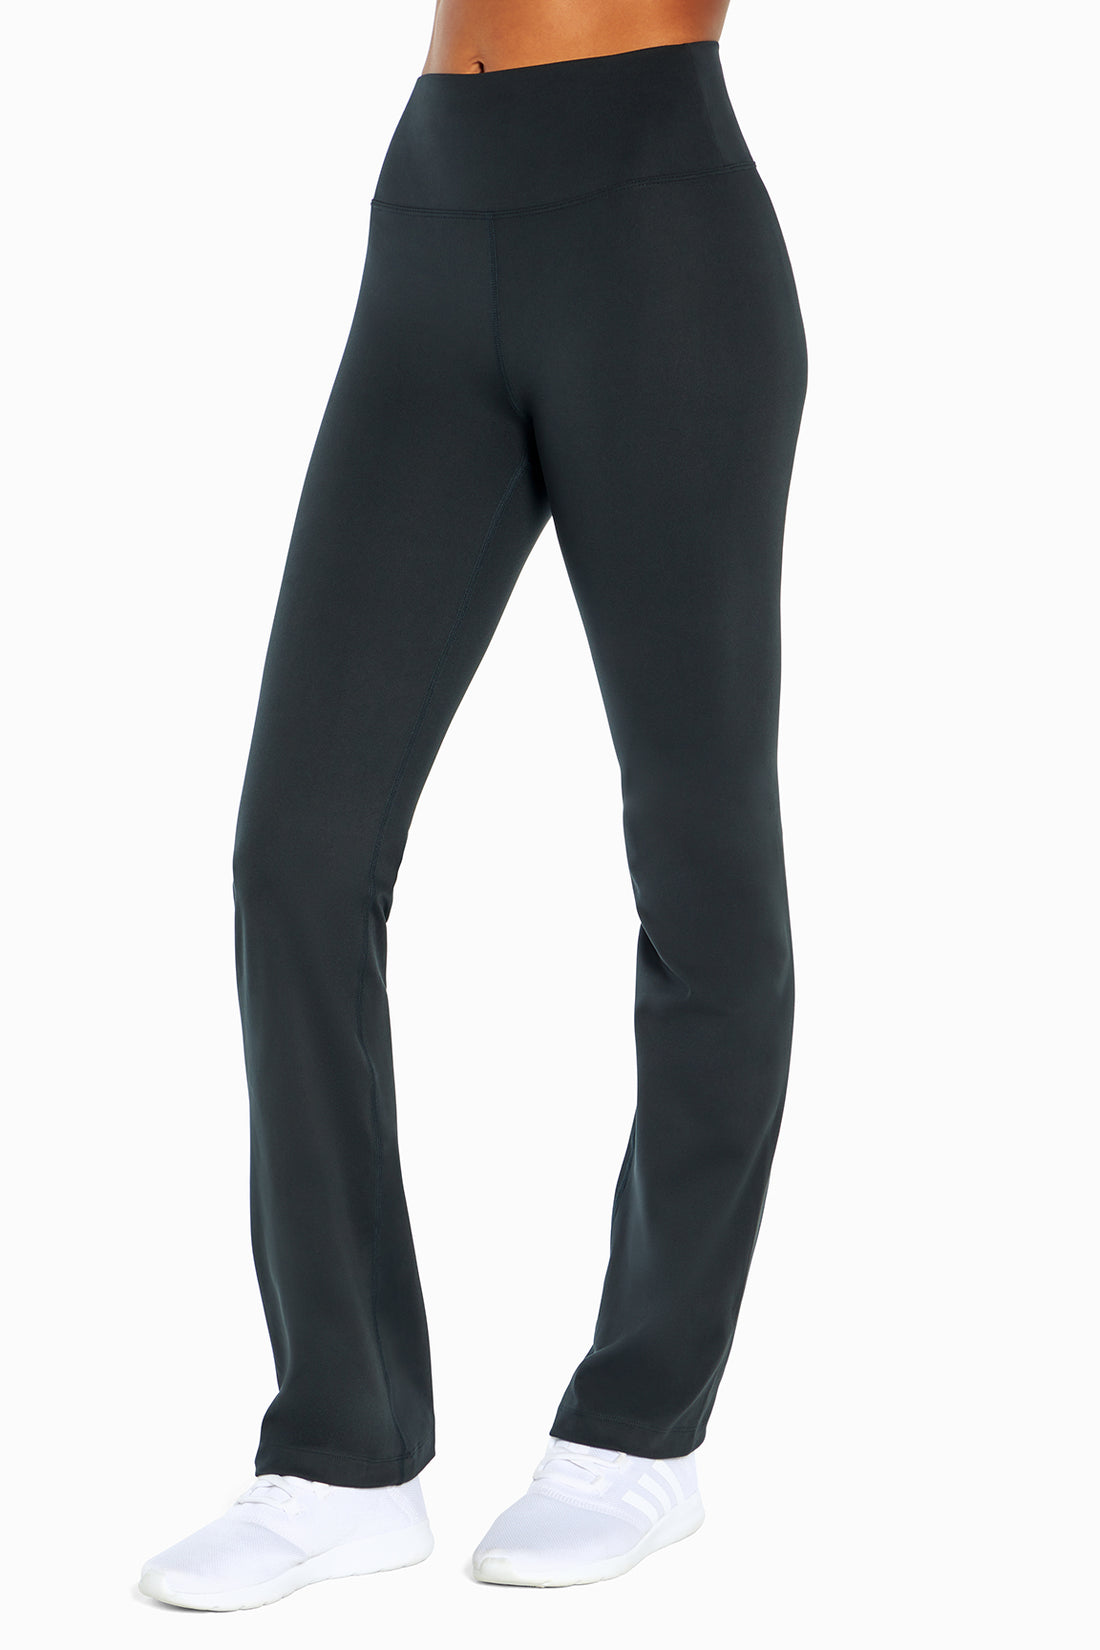 Balance Collection Black Active Pants Size M - 71% off